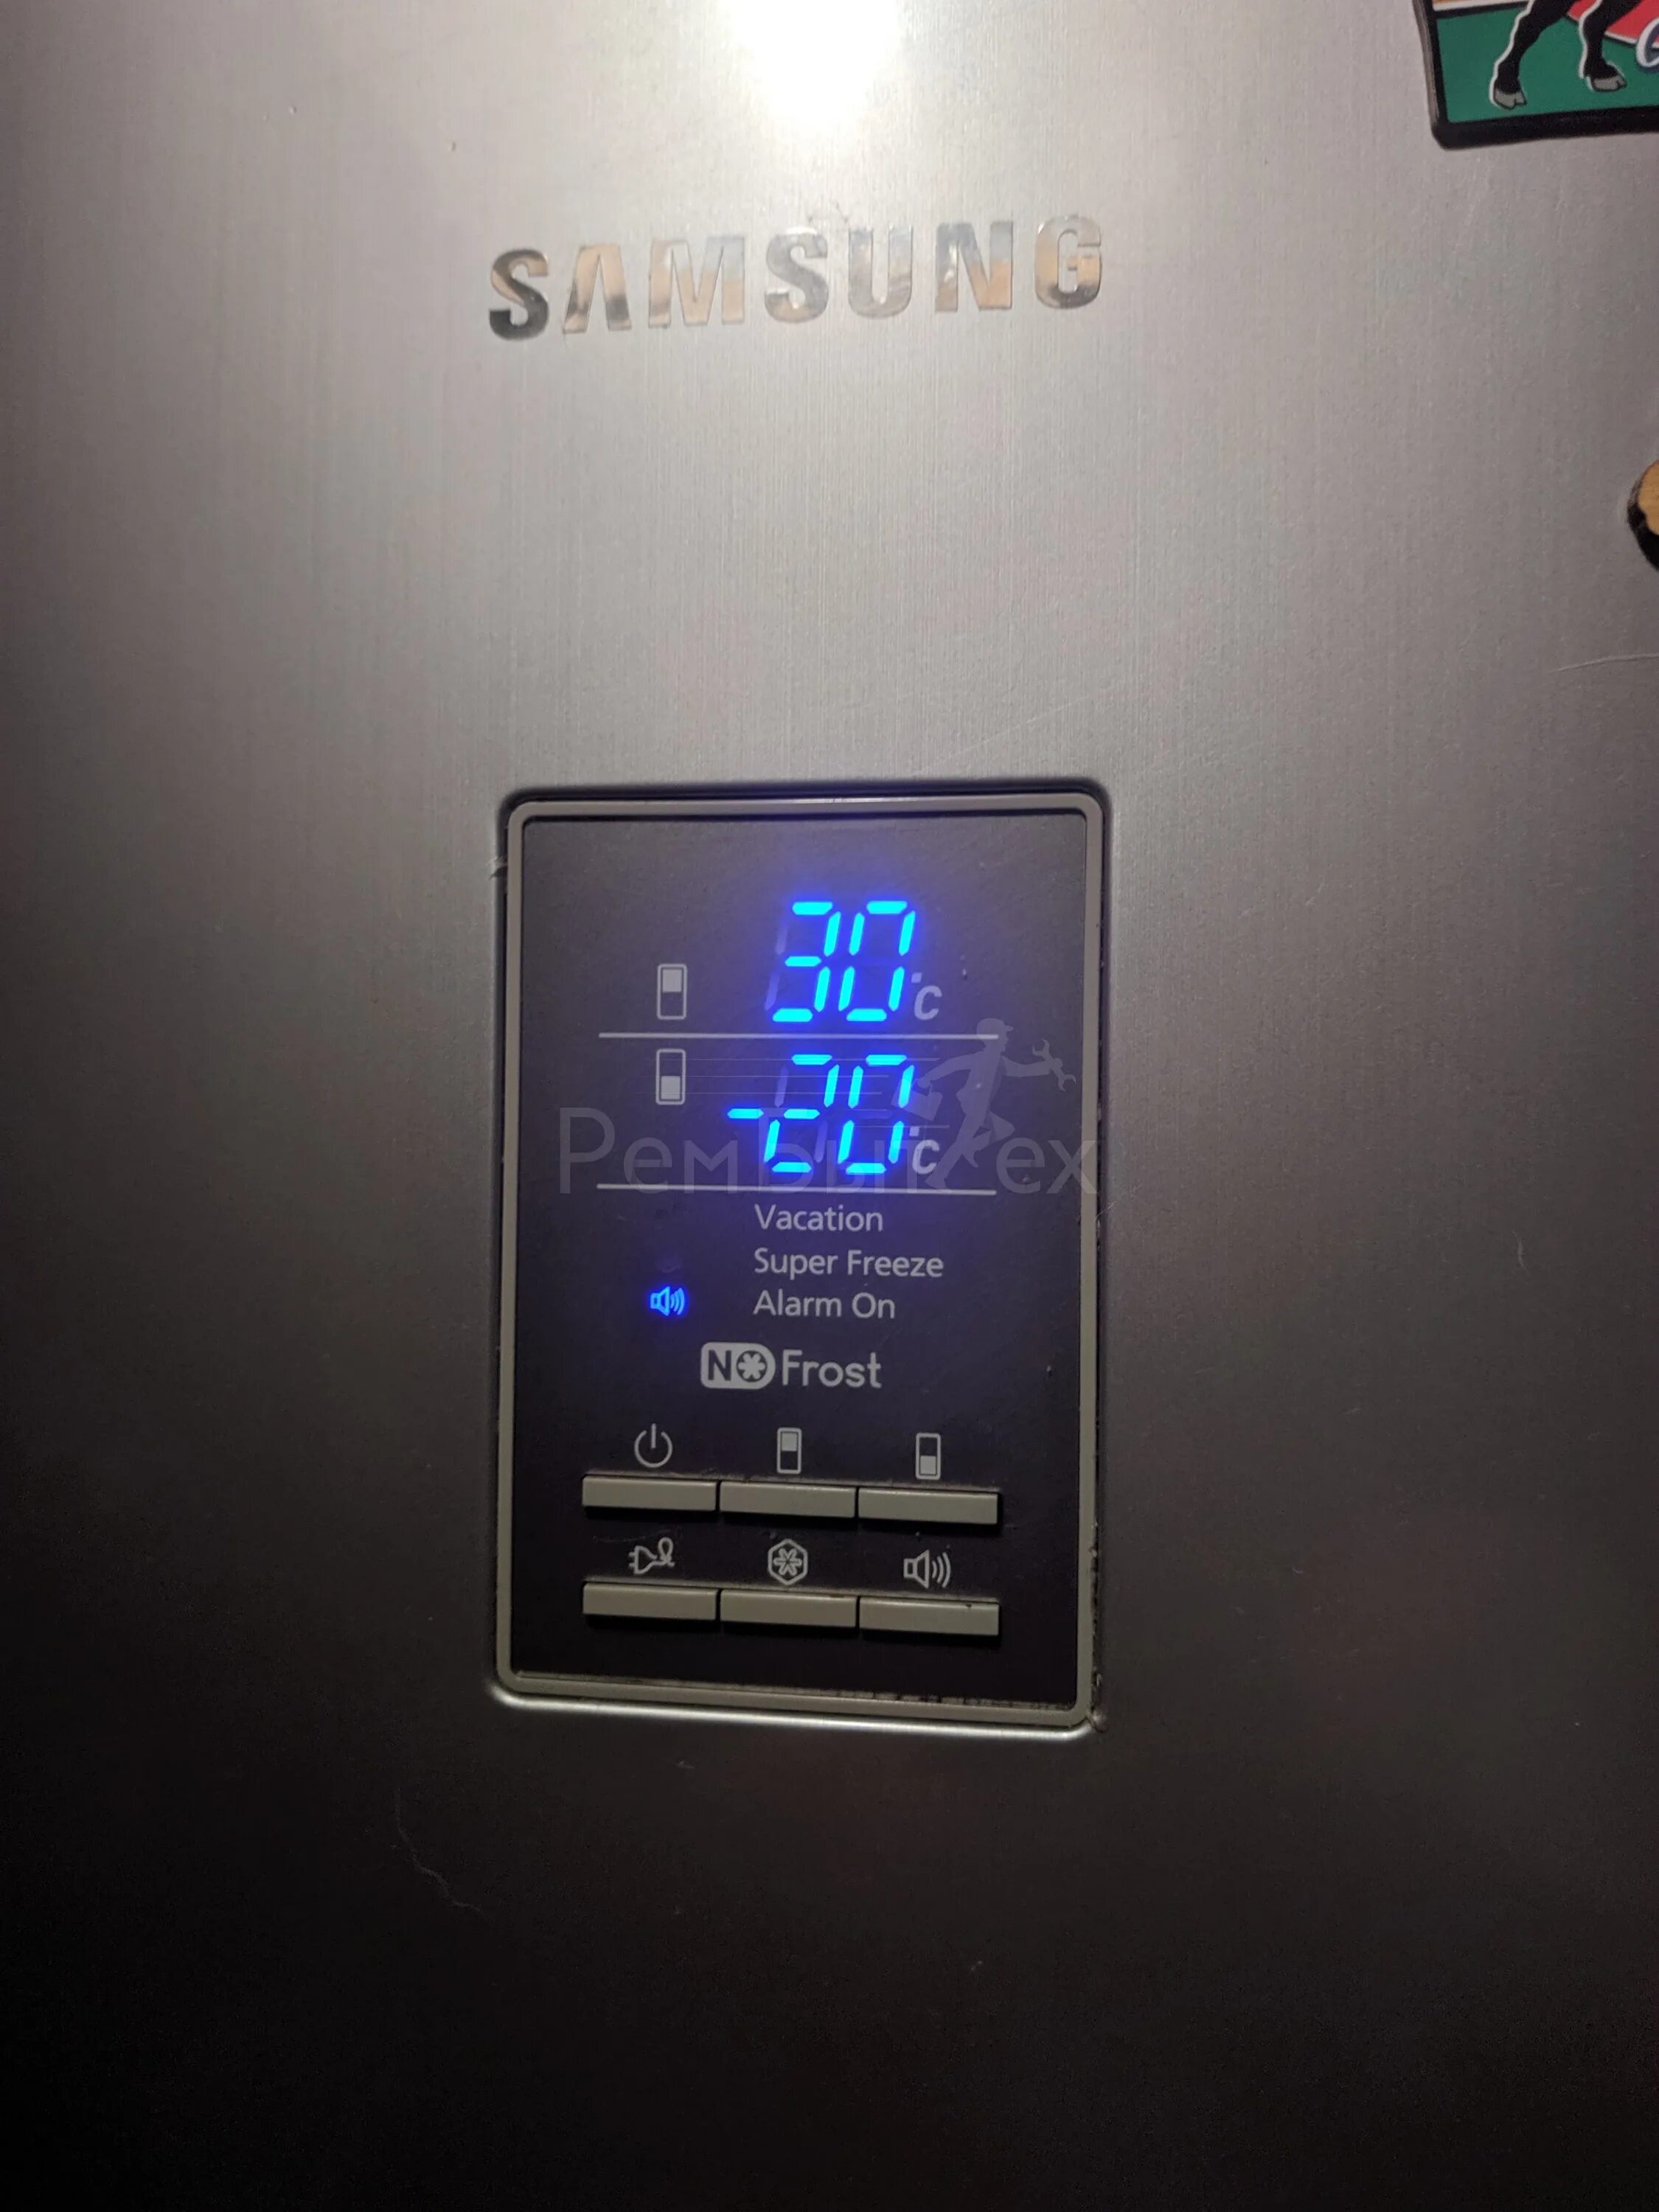 Samsung rl 34. Samsung RL-34 ECTS. Холодильник самсунг rl34ects. Дисплей холодильника Samsung RL 34. Холодильник самсунг двухкамерный с дисплеем rl34 ects1.